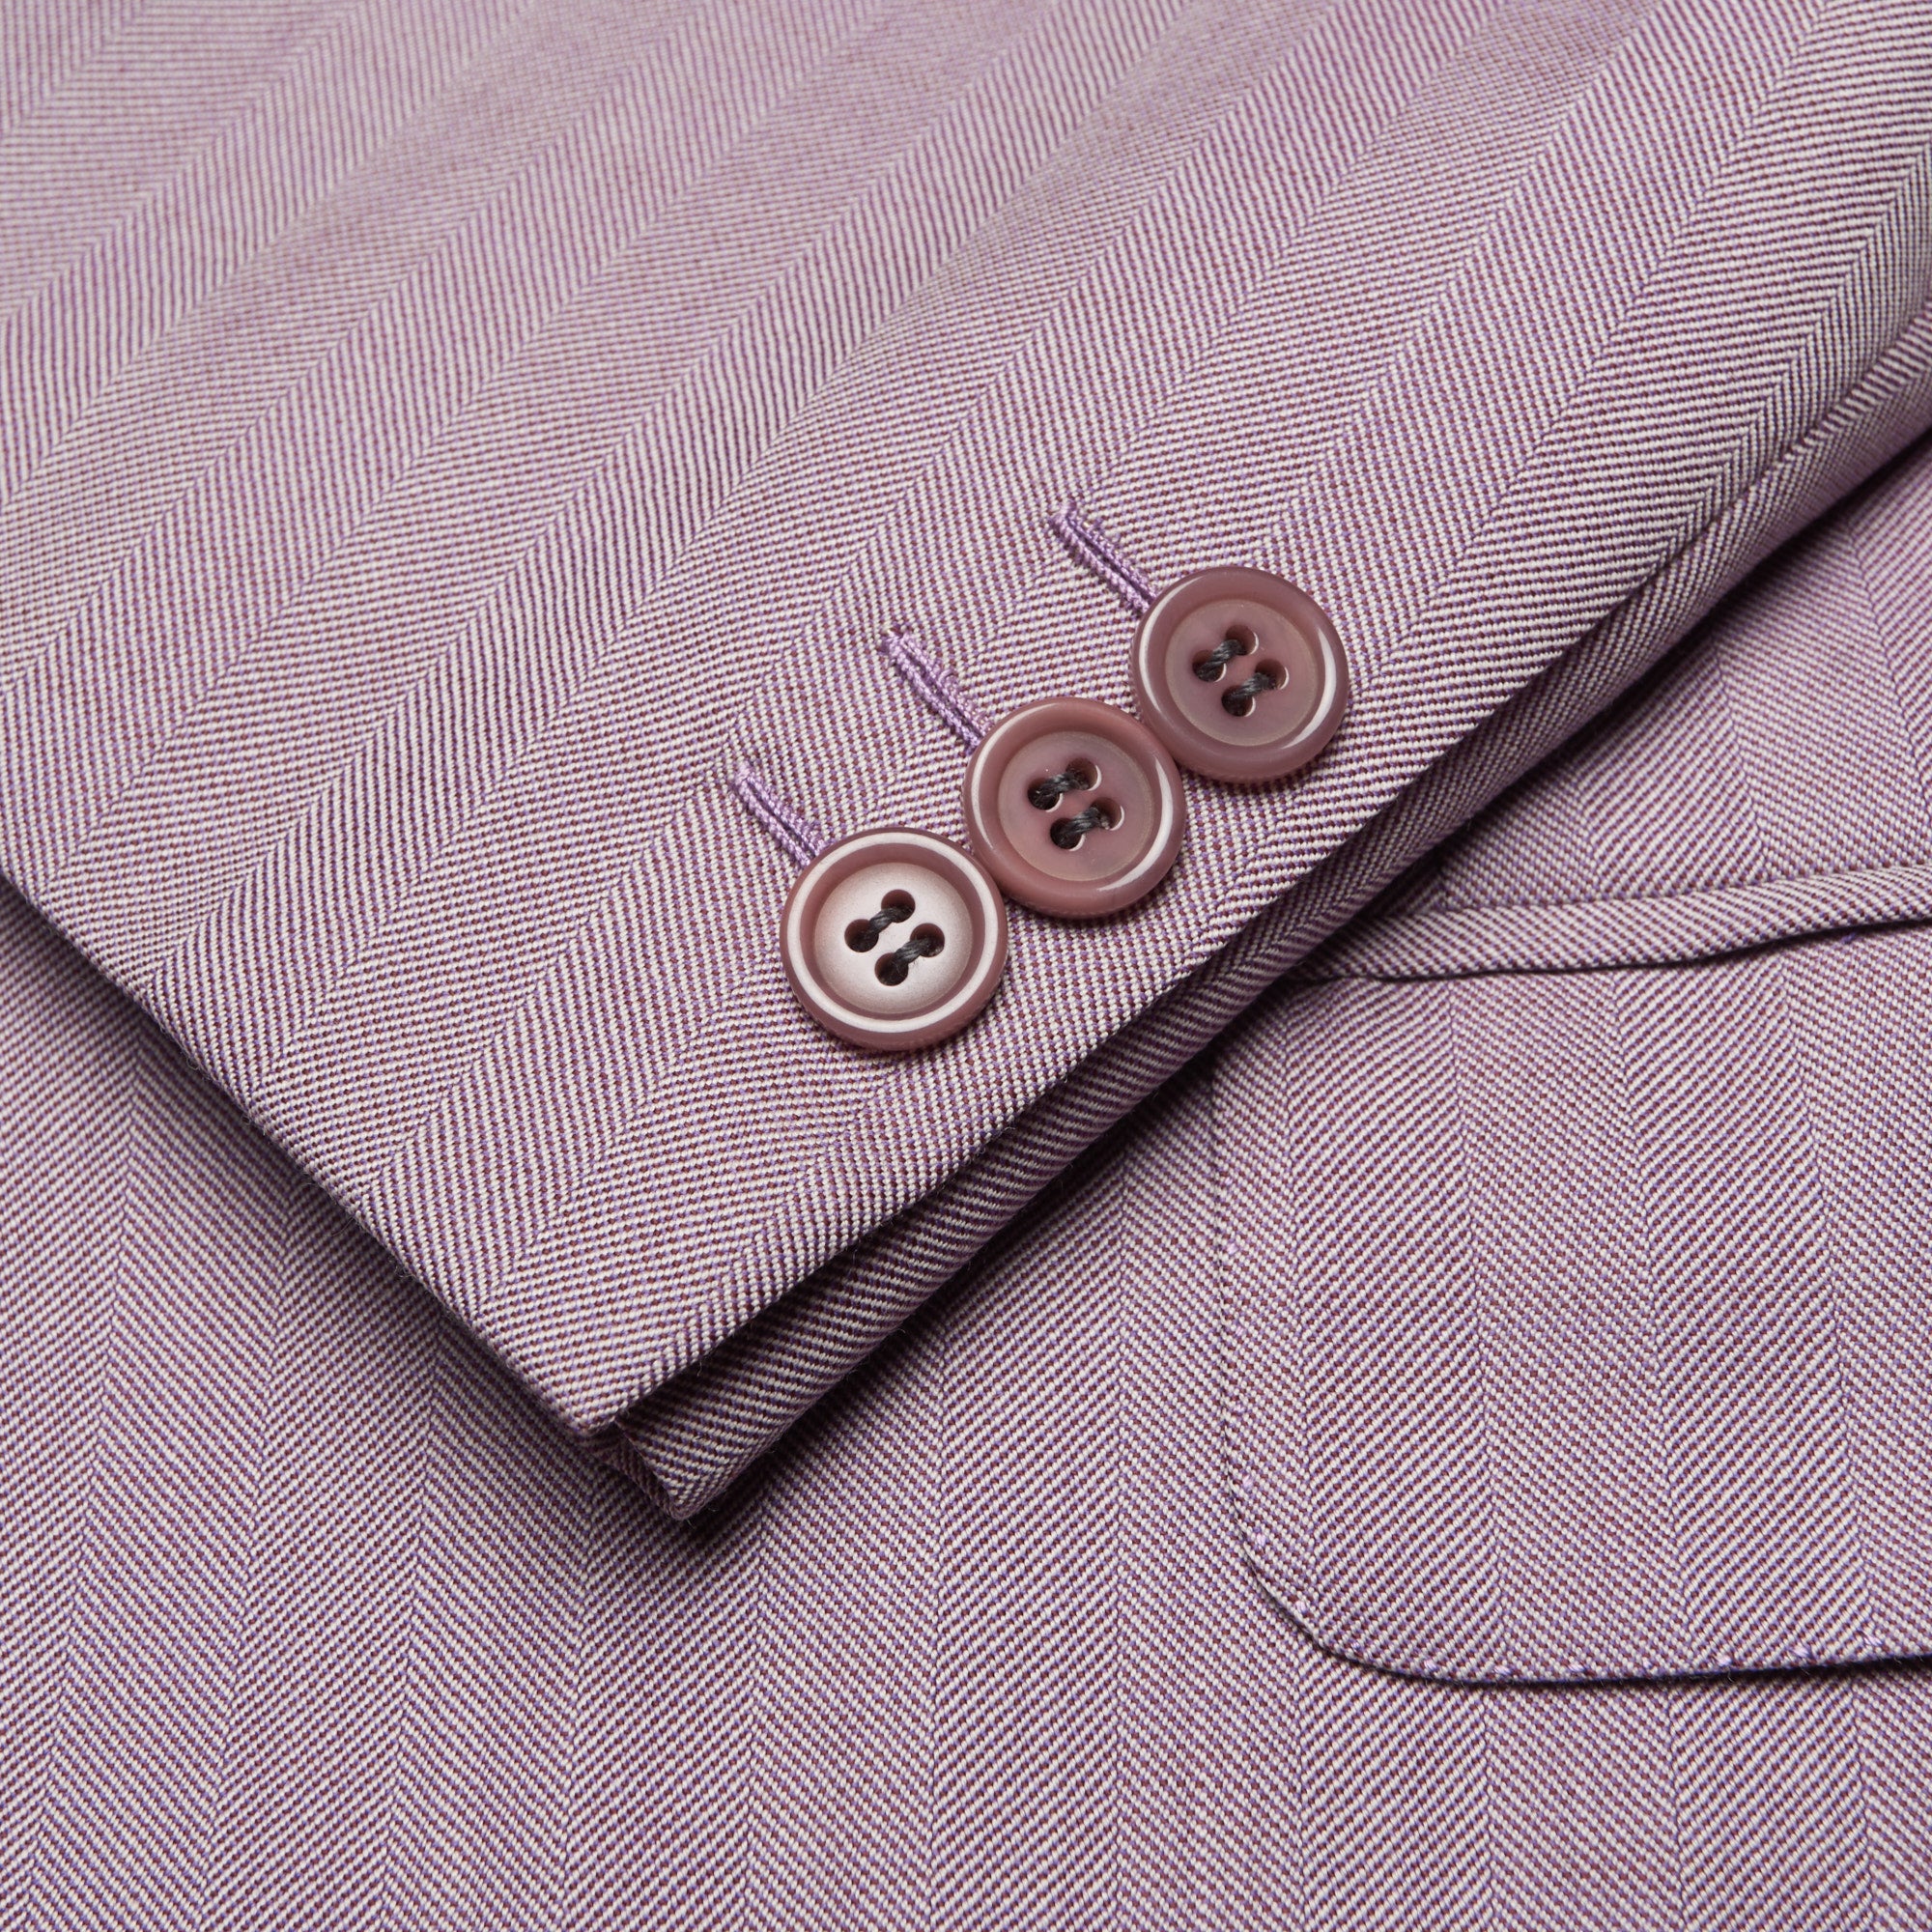 BRIONI "COLONNA" Handmade Light Purple Herringbone Wool Jacket EU 52 NEW US 42 BRIONI